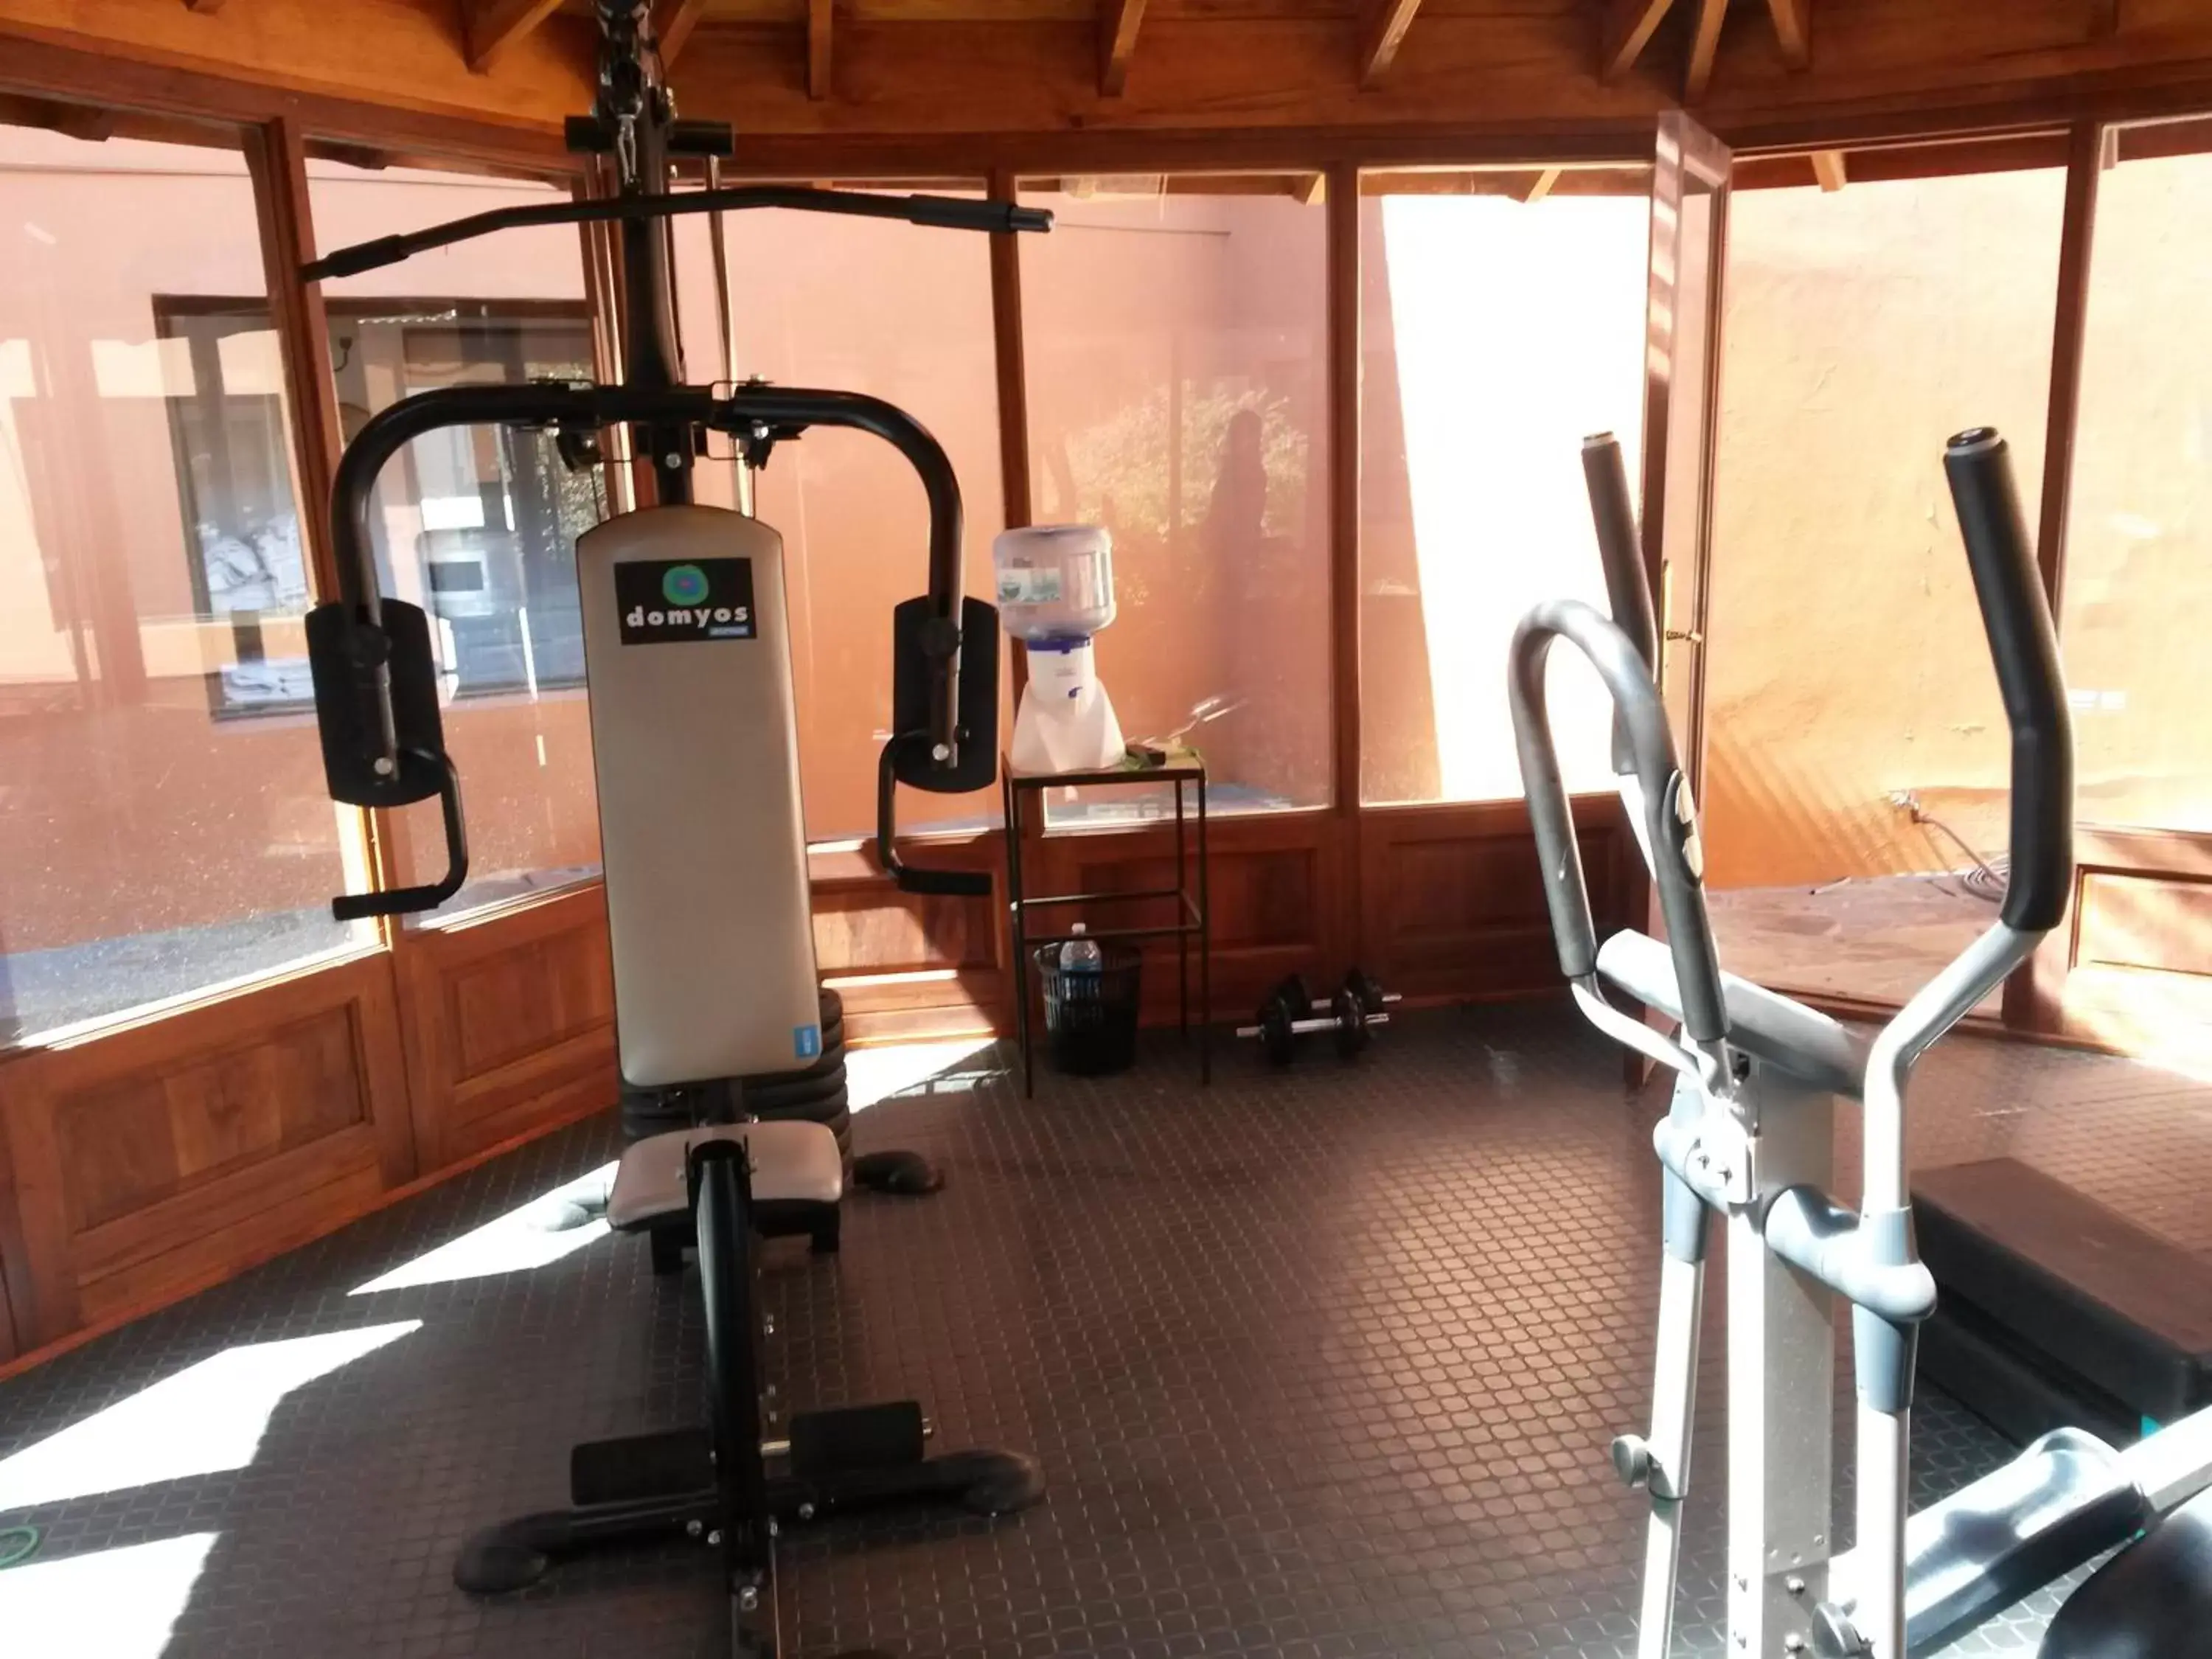 Fitness centre/facilities, Fitness Center/Facilities in Sierra Nevada